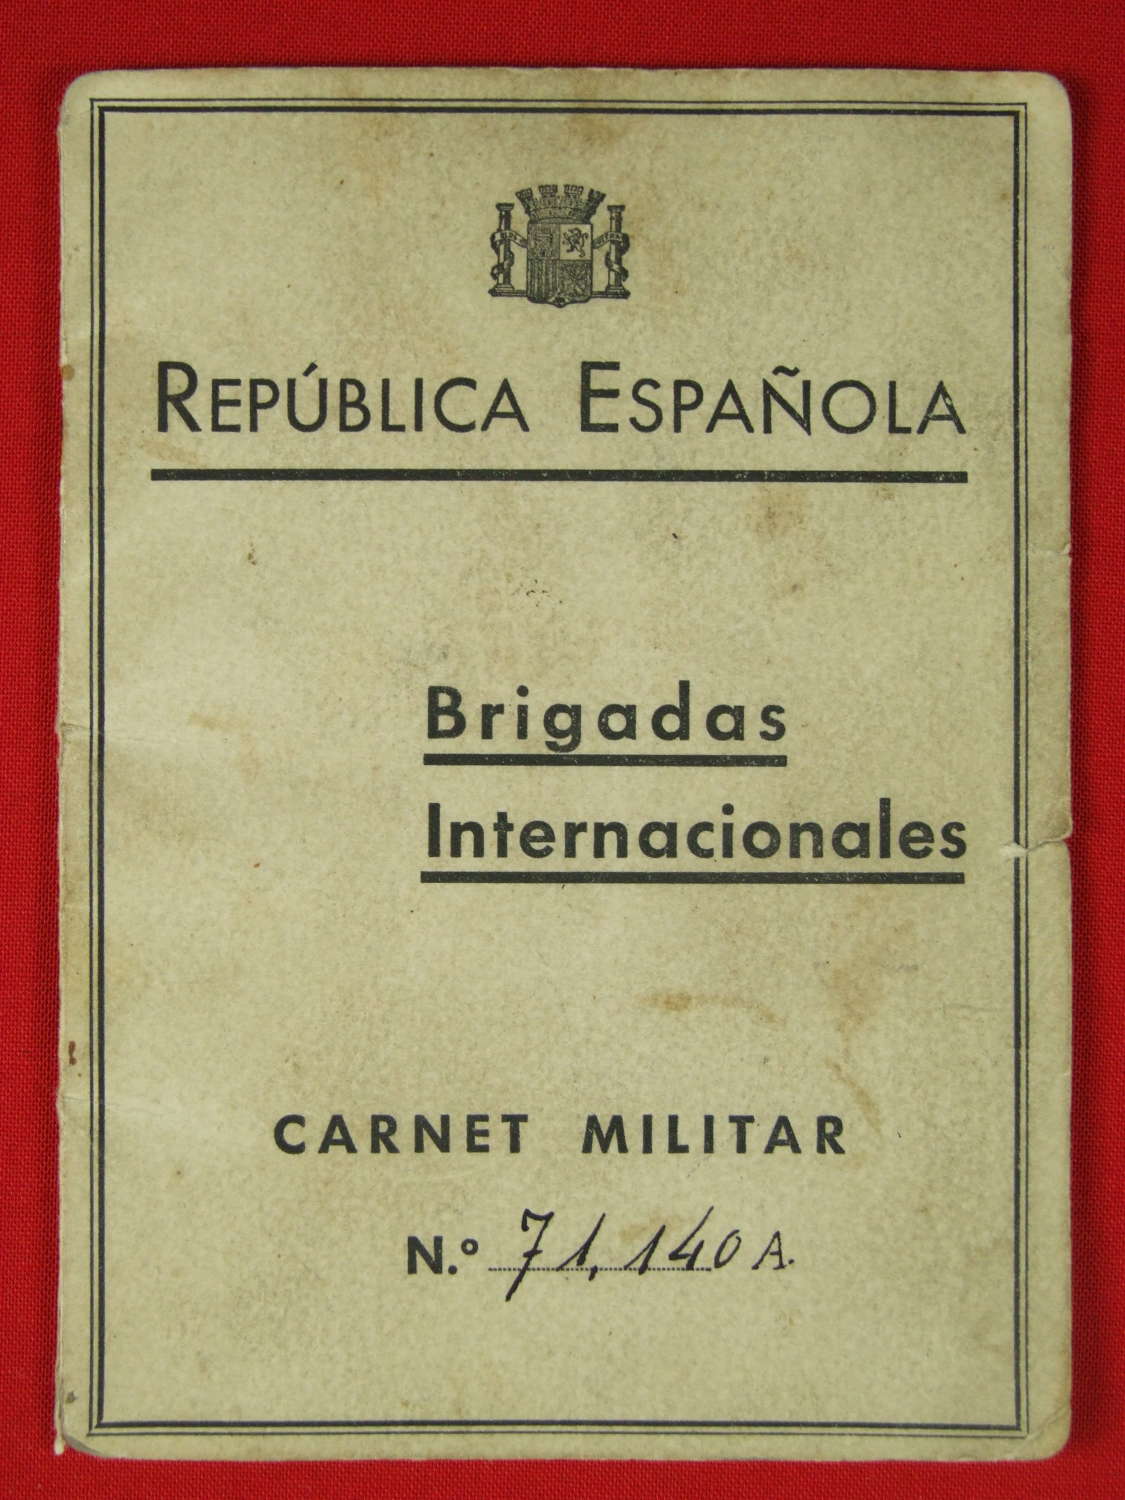 Carnet Militar To a Member of the British International Brigade